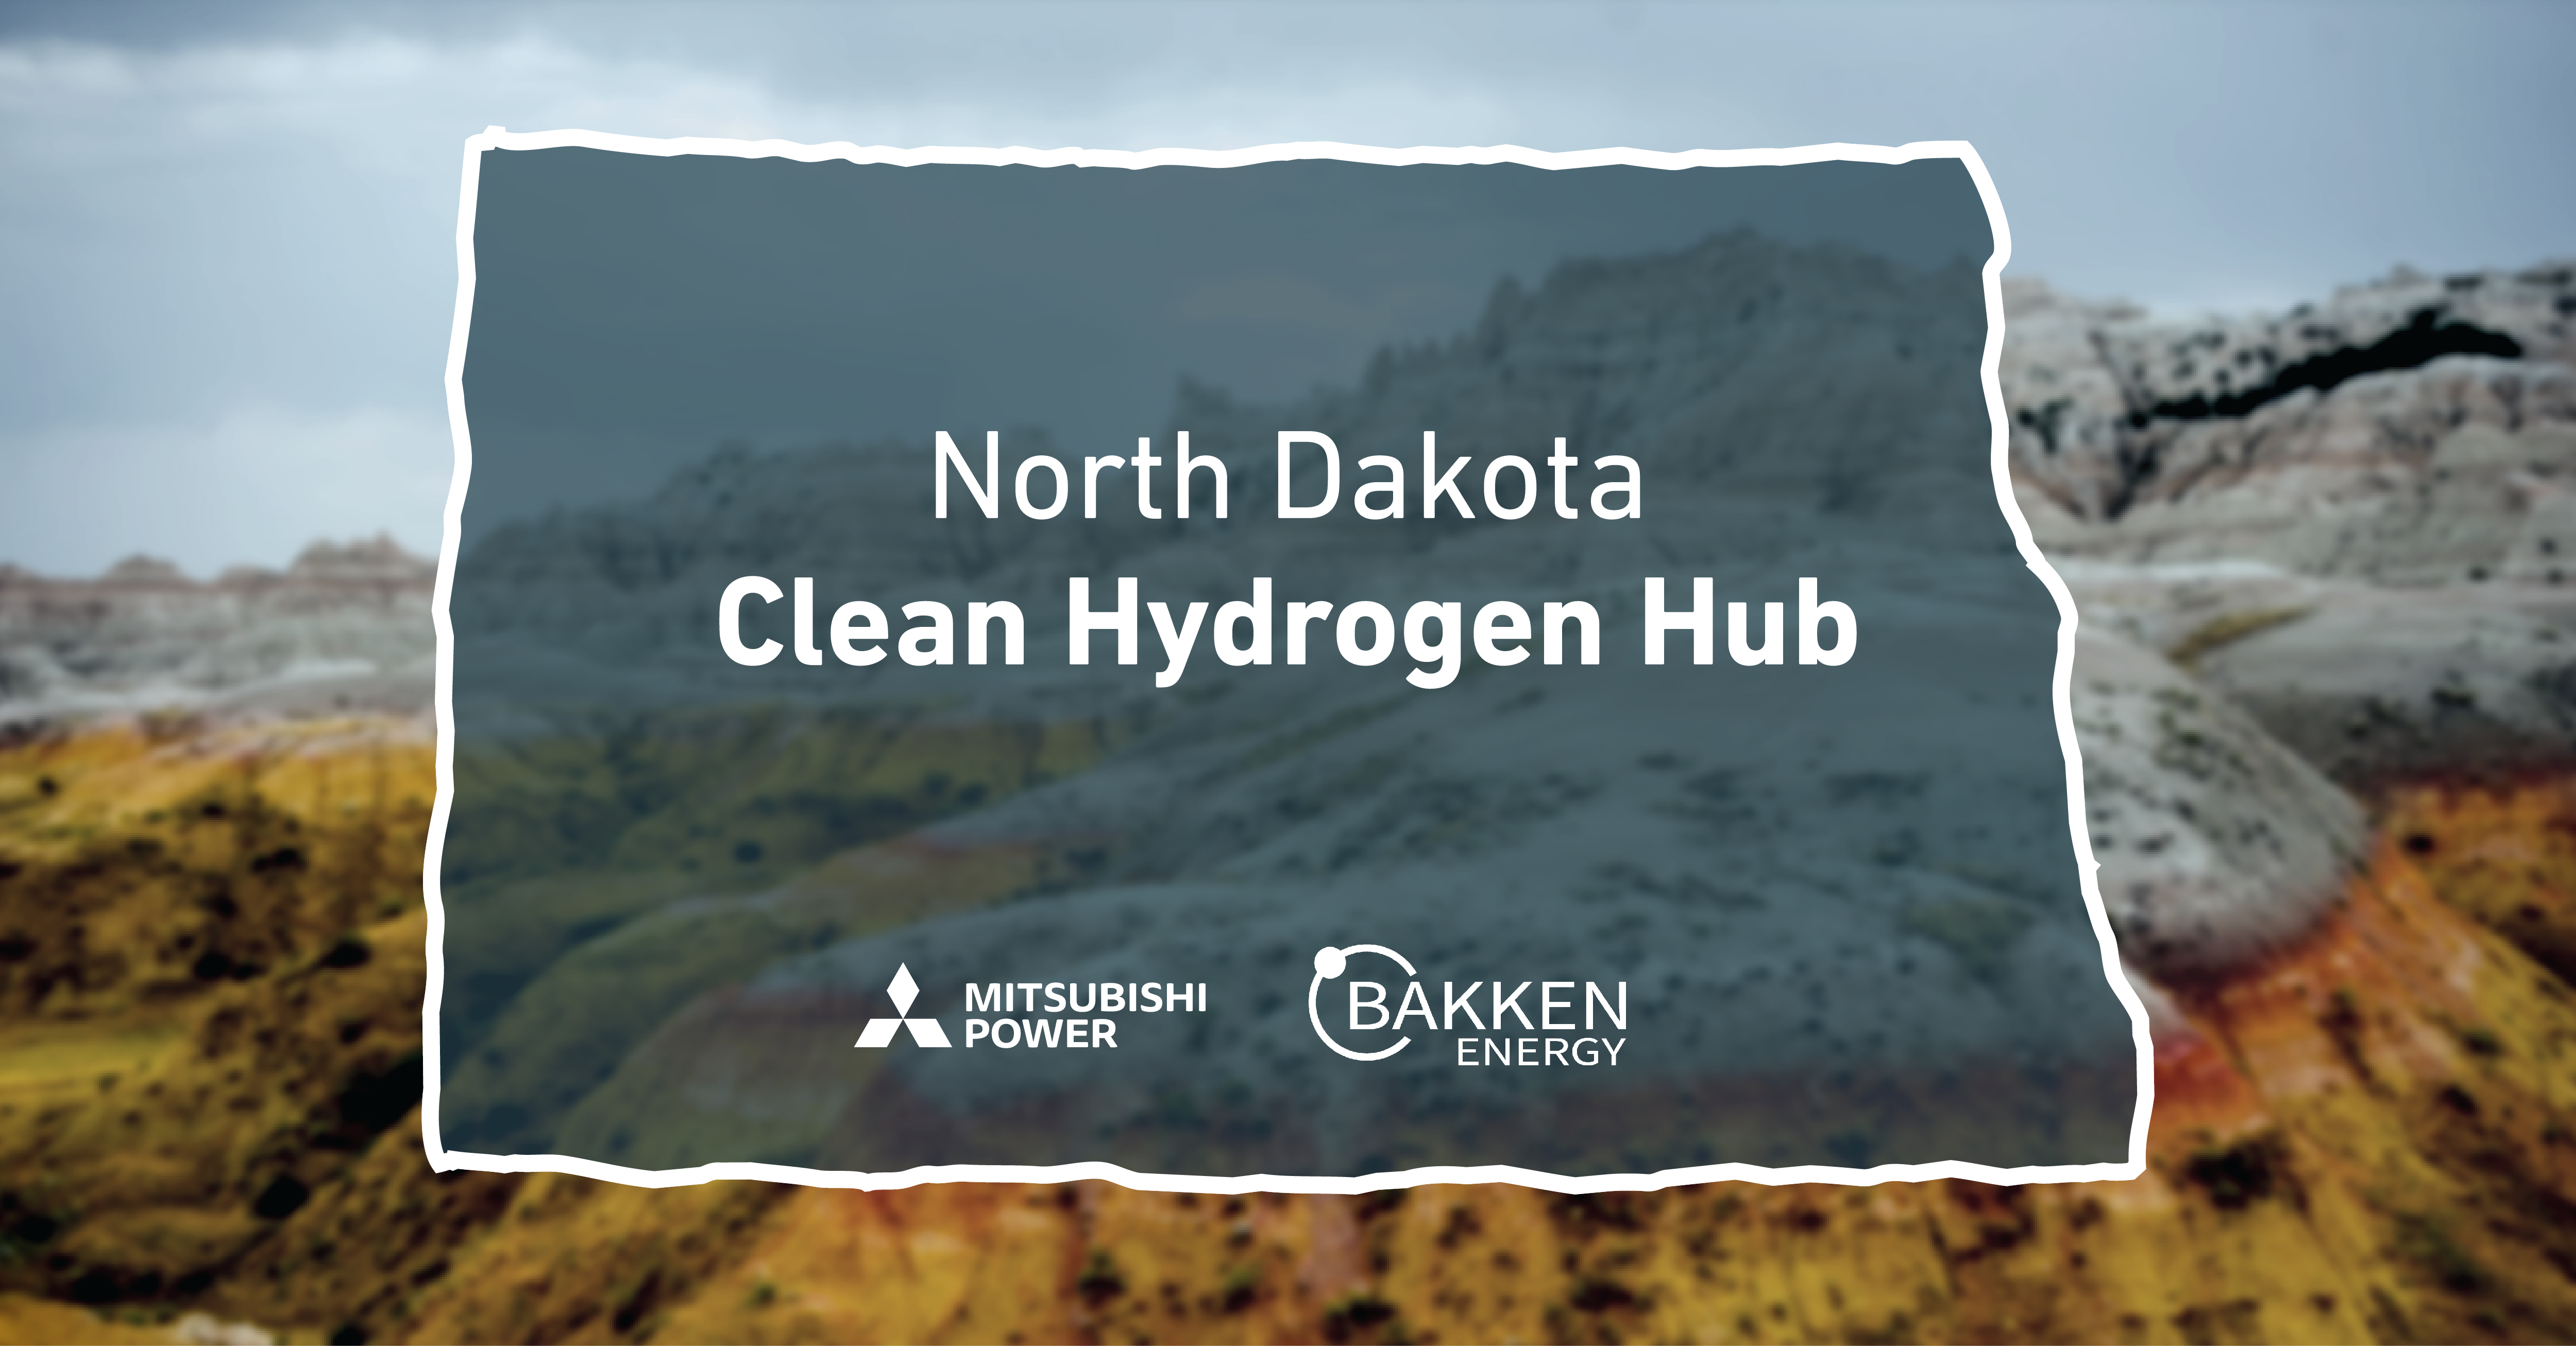 Bakken Energy - North Dakota Clean Hydrogen Hub